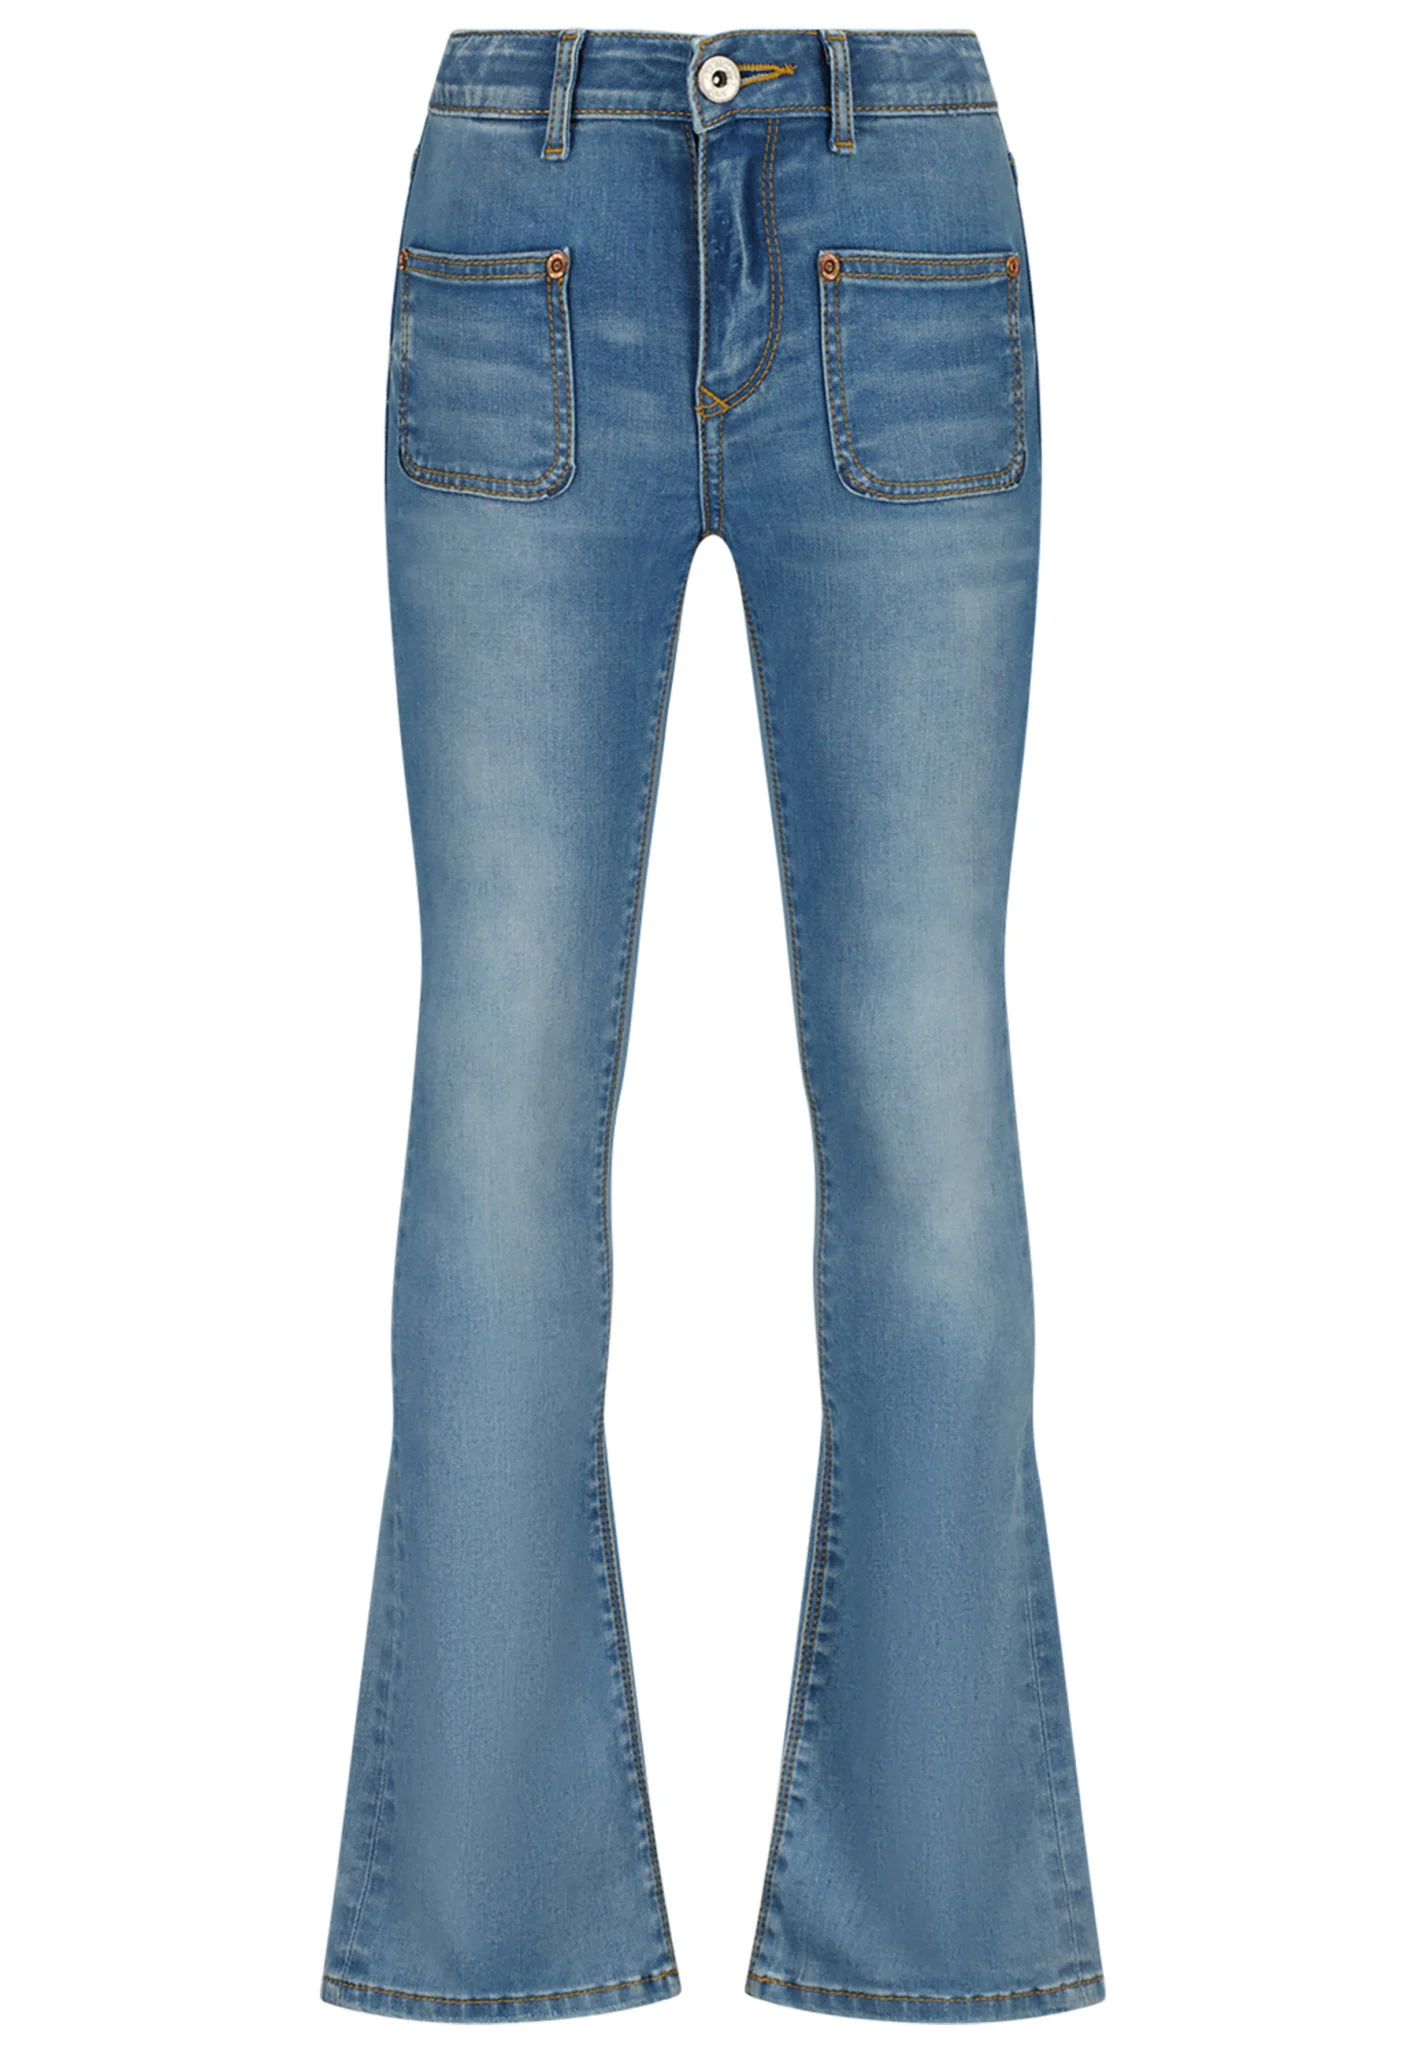 Vingino Meiden jeans britte blue vintage